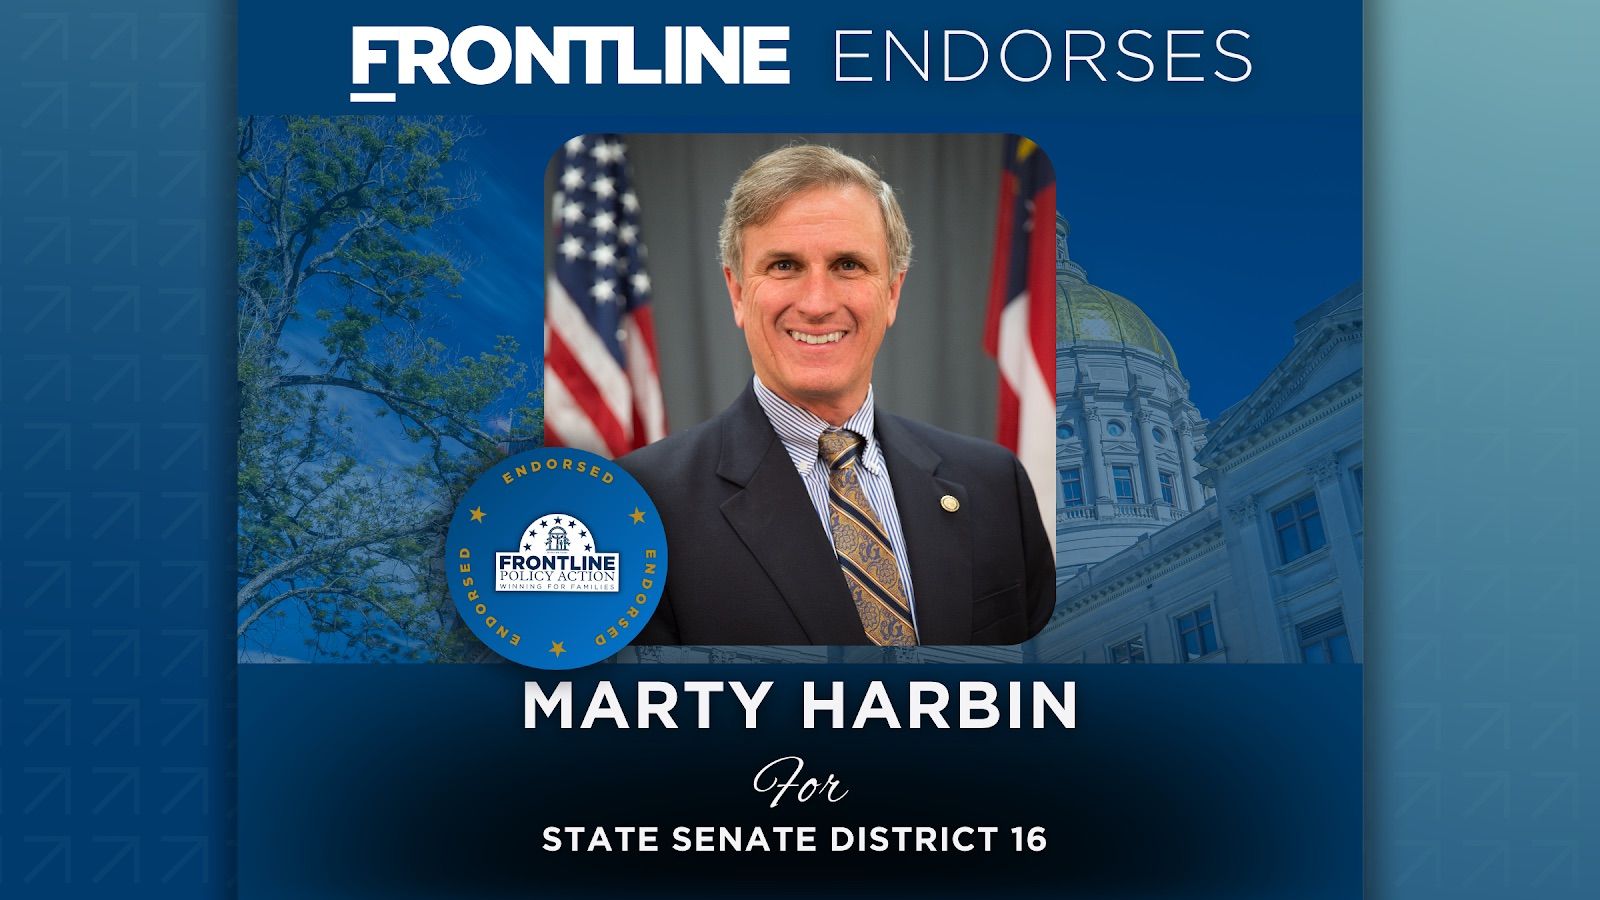 BREAKING: Frontline Endorses Marty Harbin for State Senate District 16